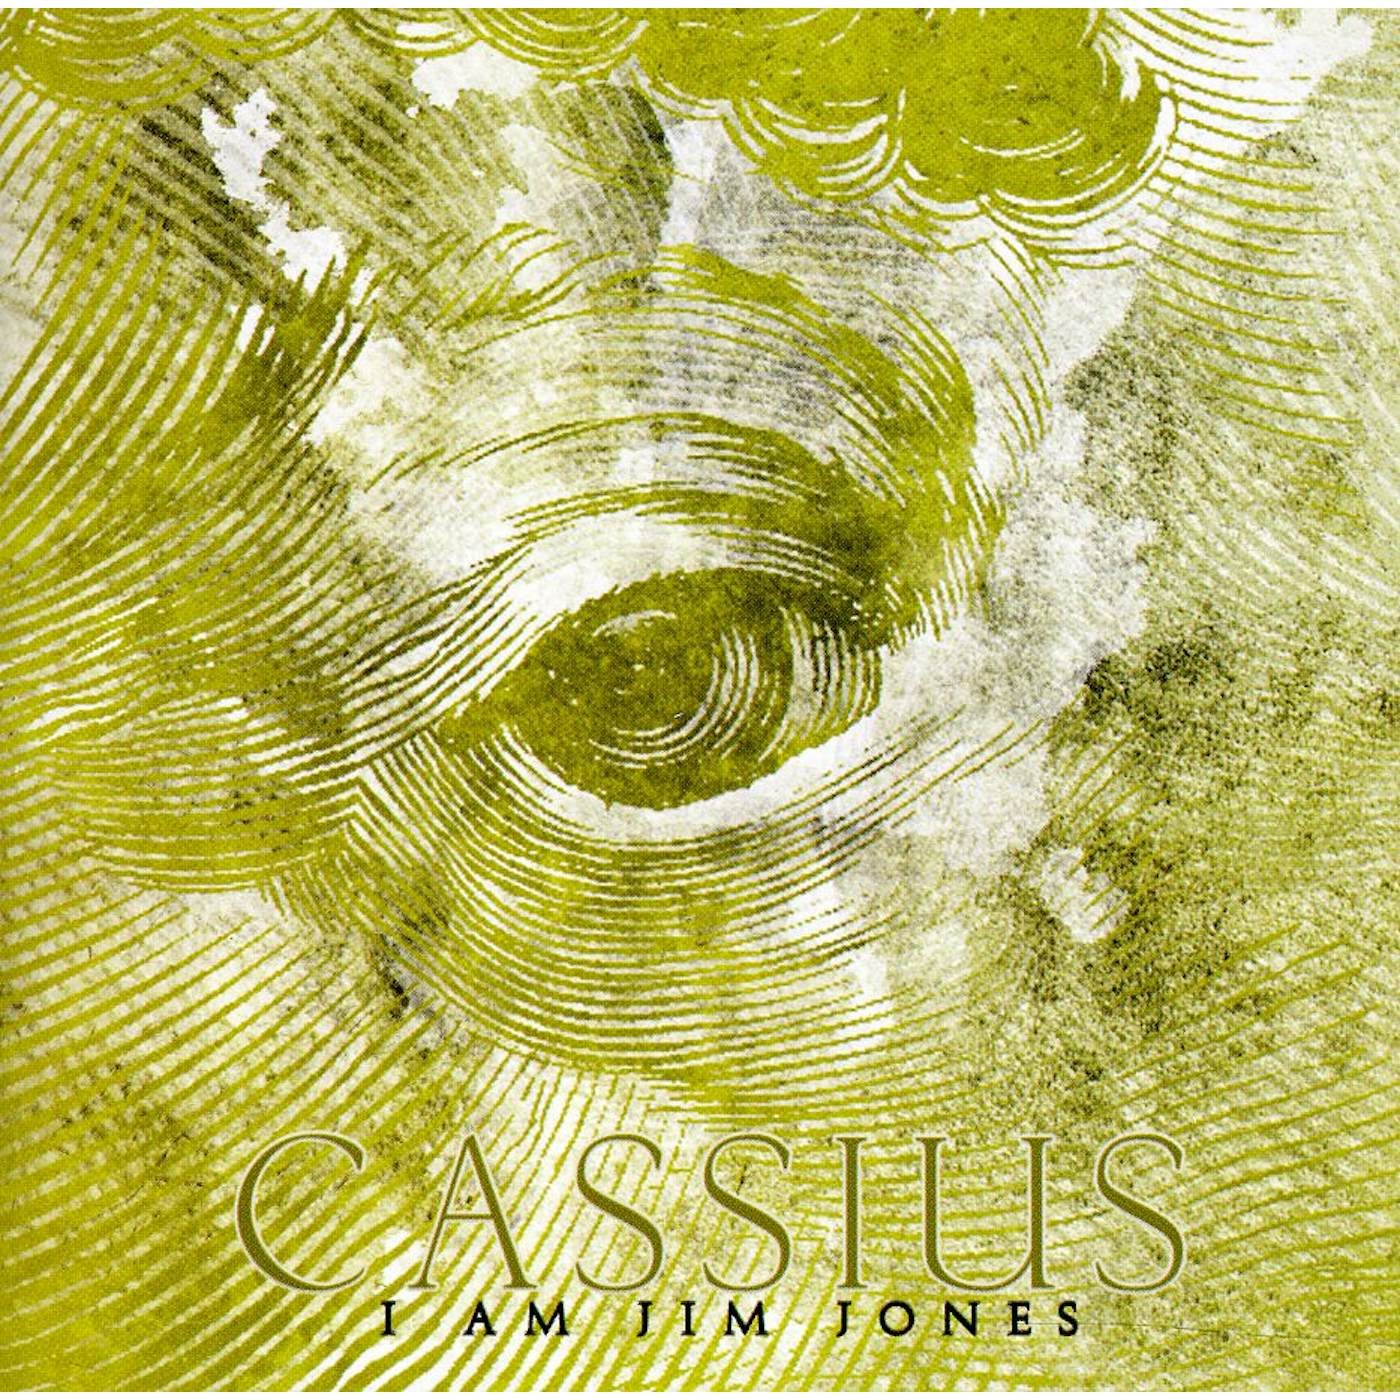 Cassius I AM JIM JONES CD